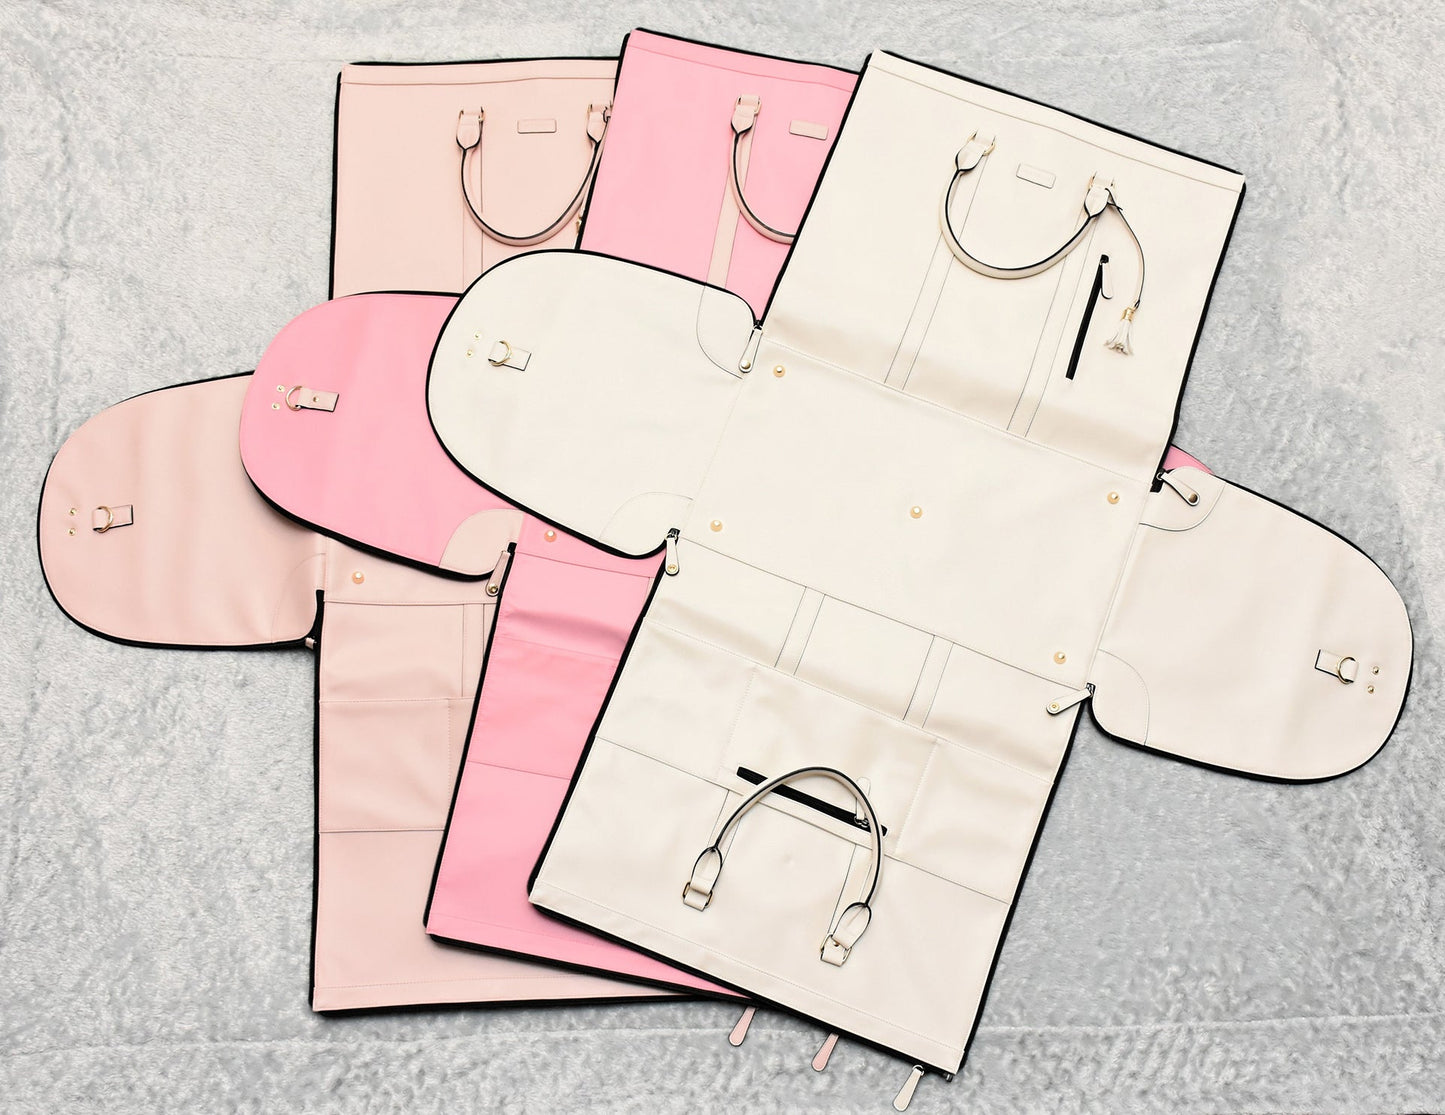 Ziva Duffle Bag - Nylon Pink